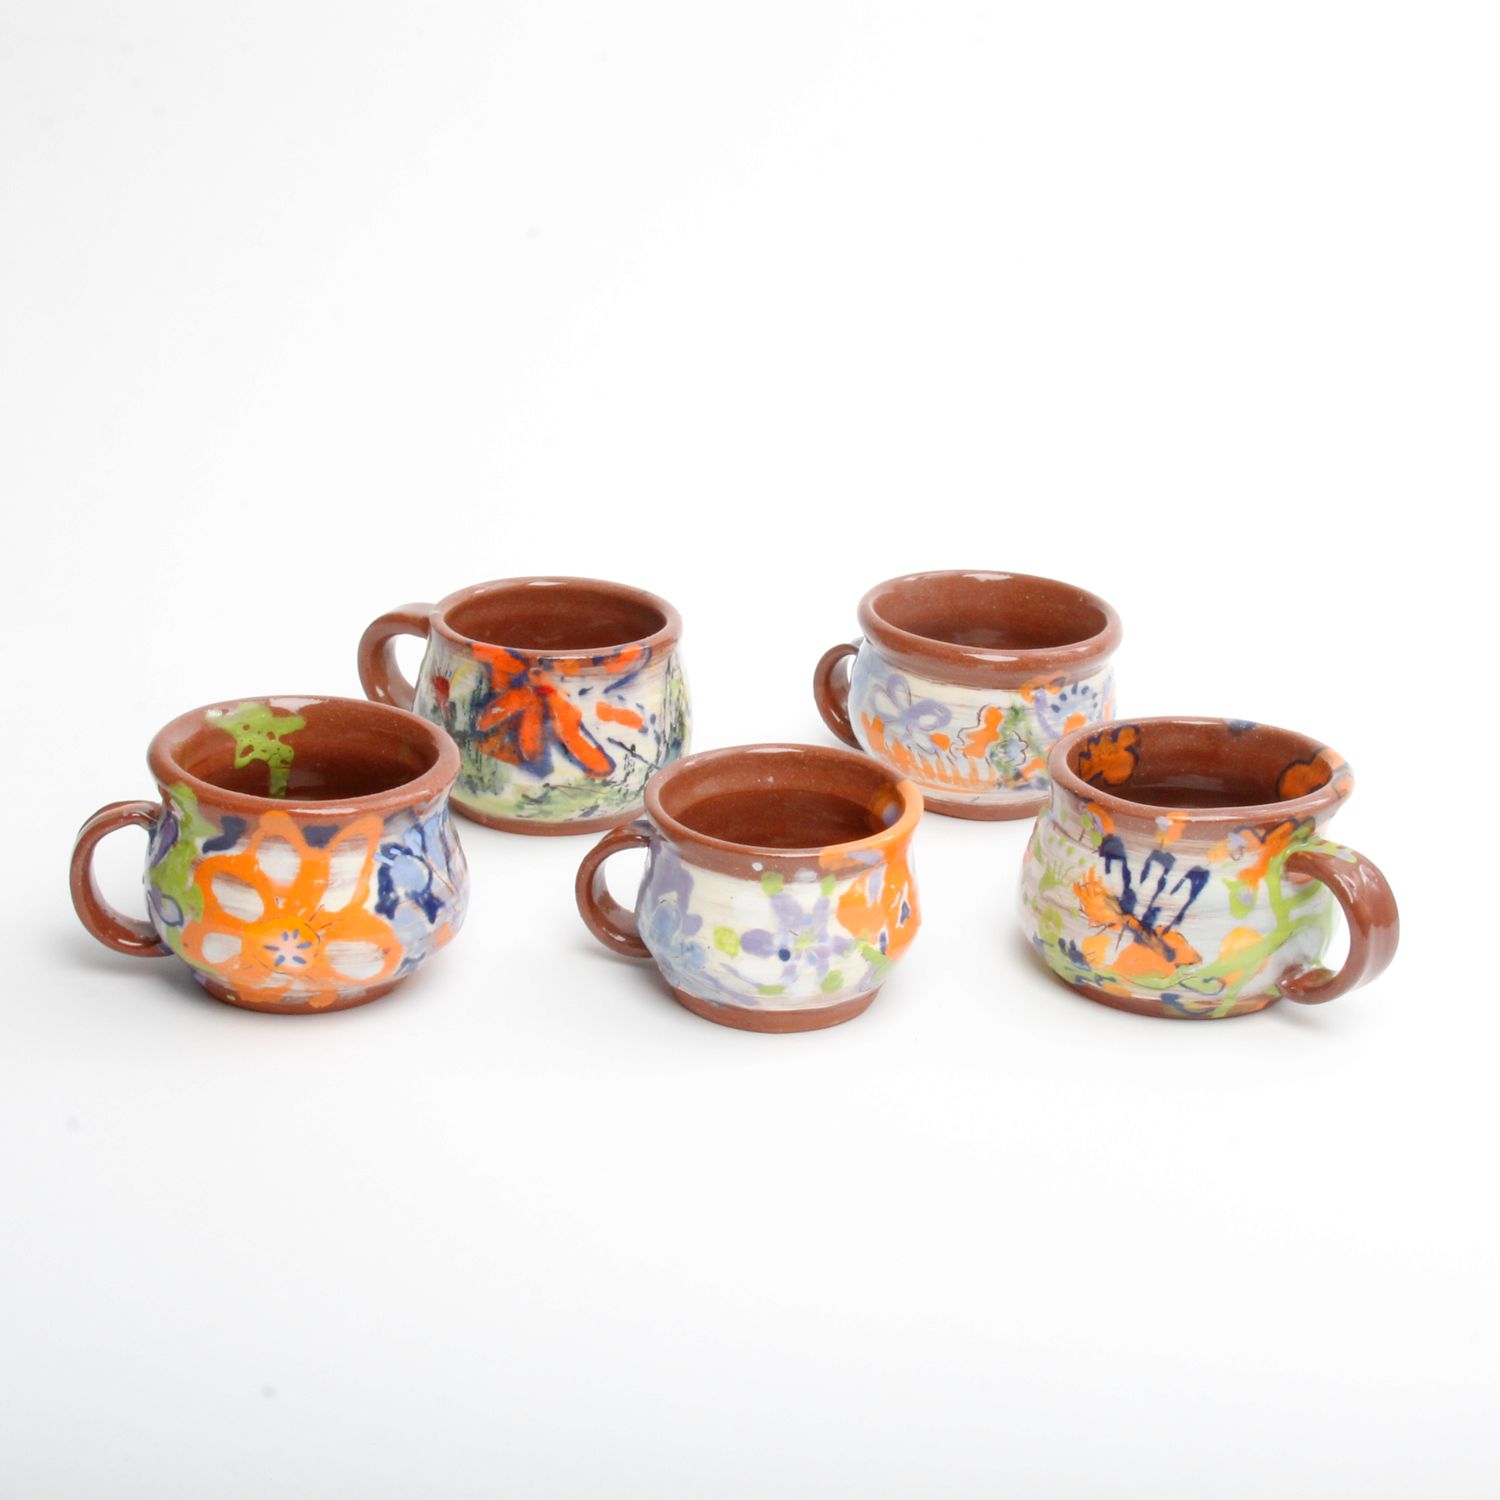 Annie McDonald: Garden mug Product Image 2 of 3